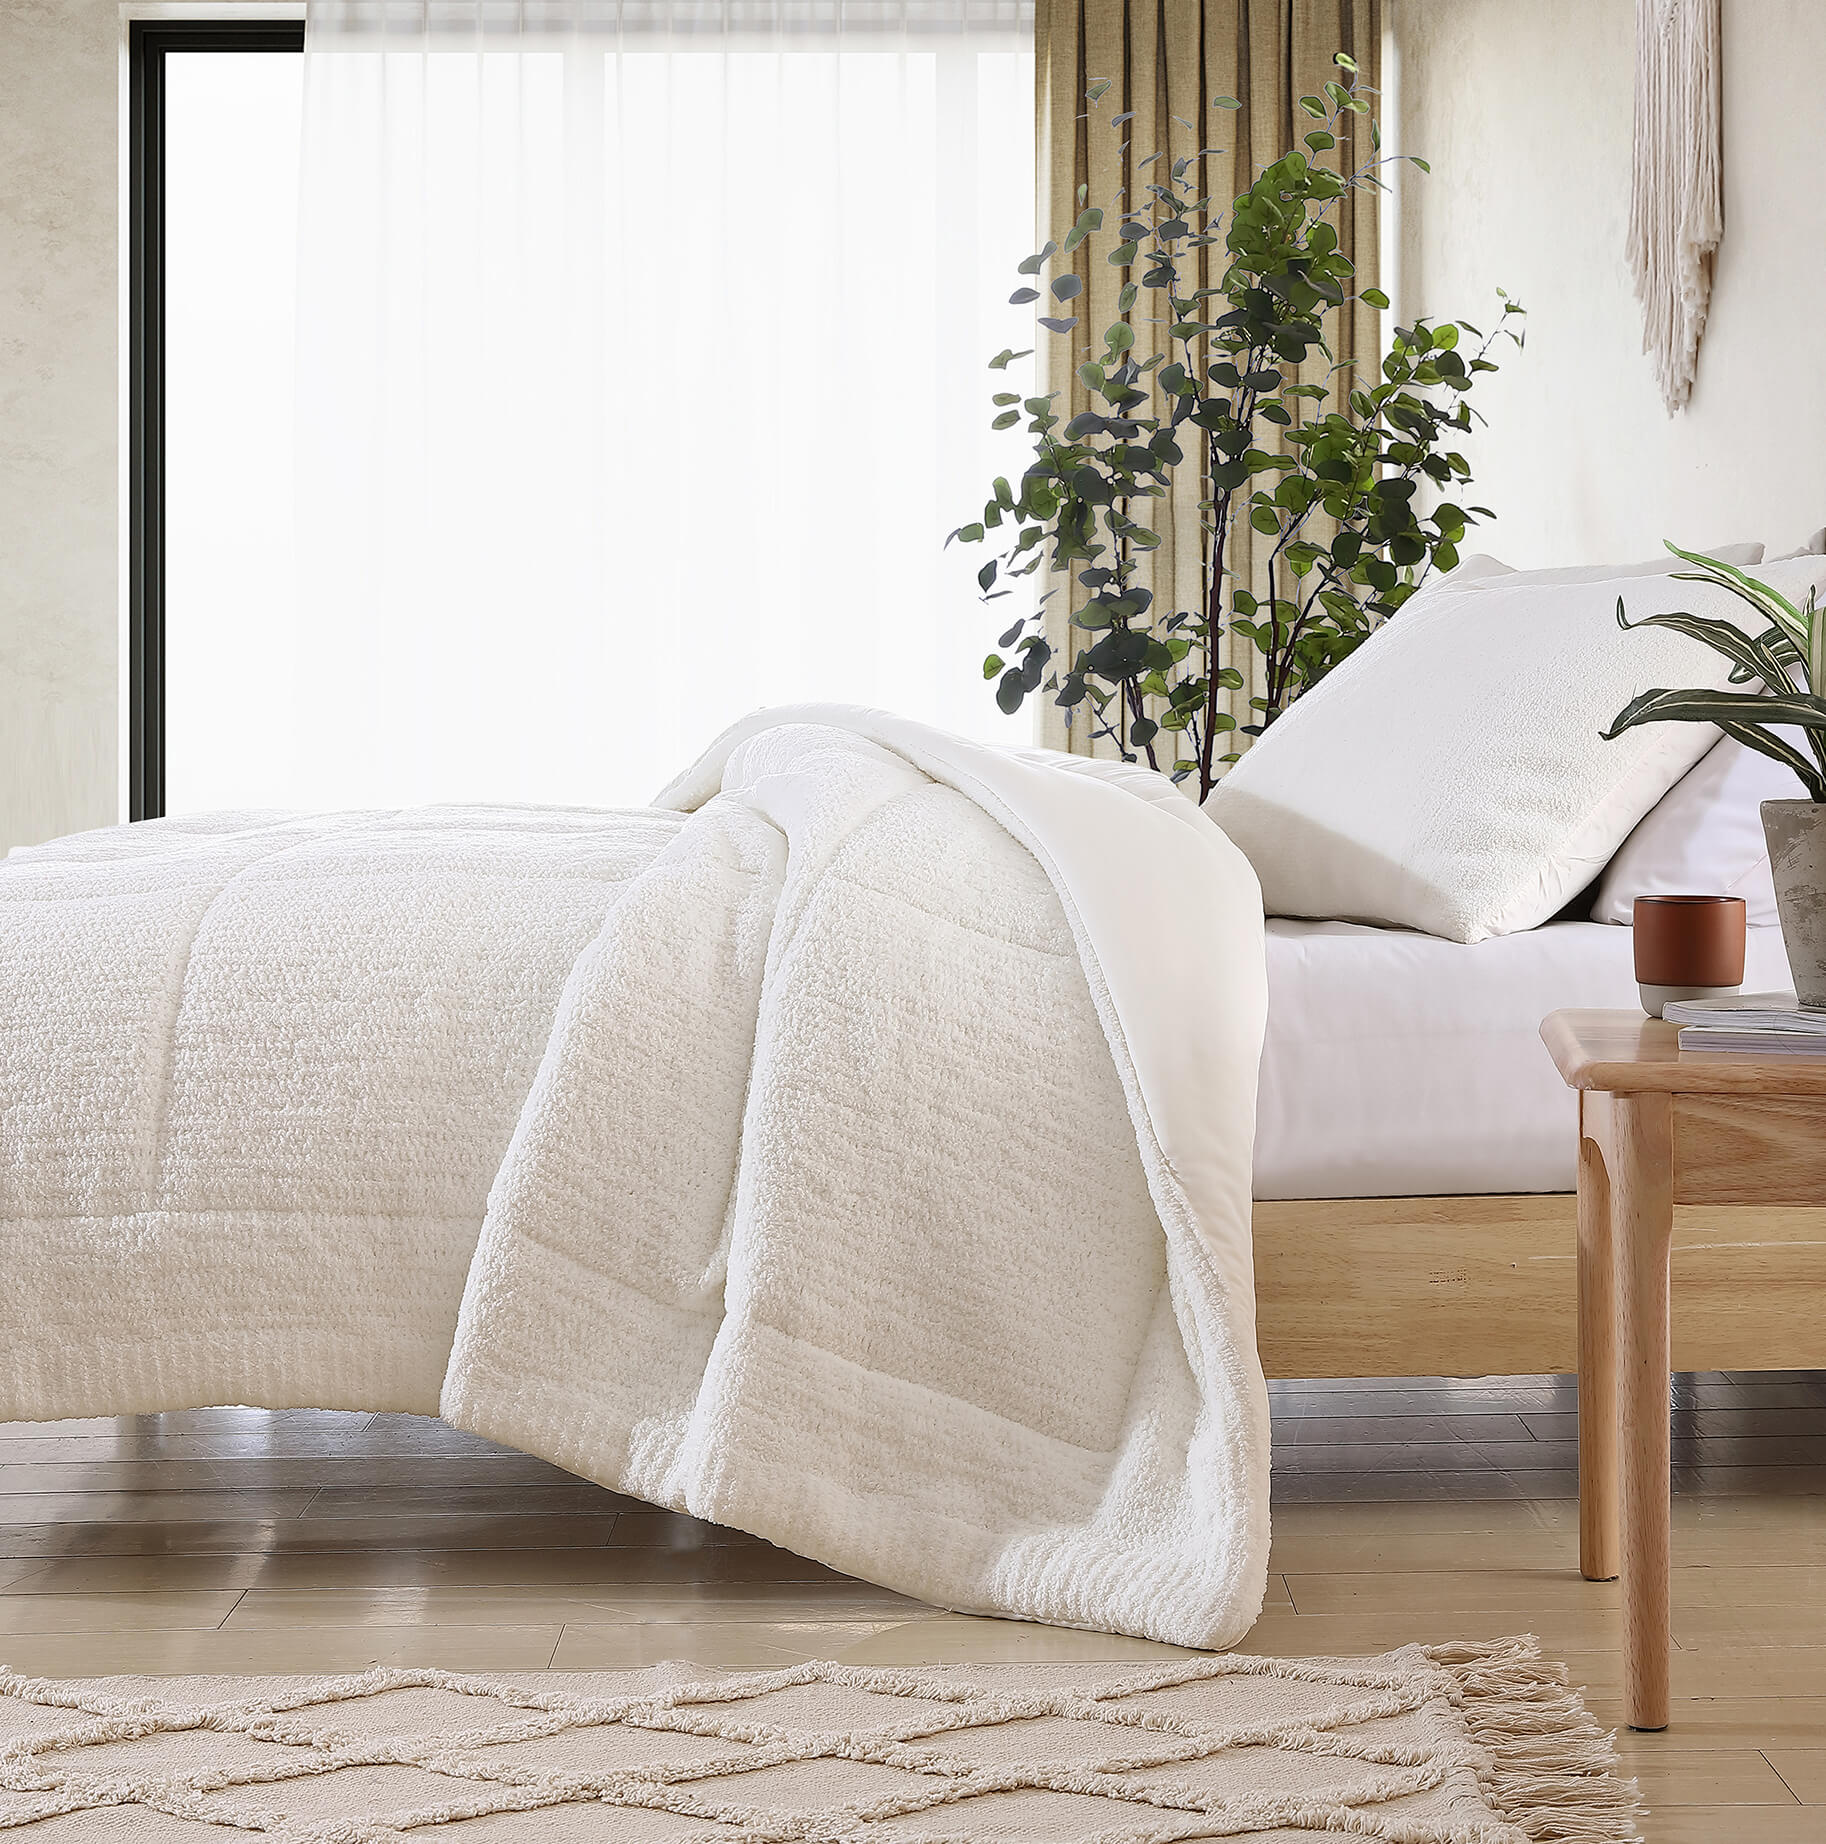 Comforters vs. Duvet. Sunday Citizen Snug Quilted Comforter in Off-White.